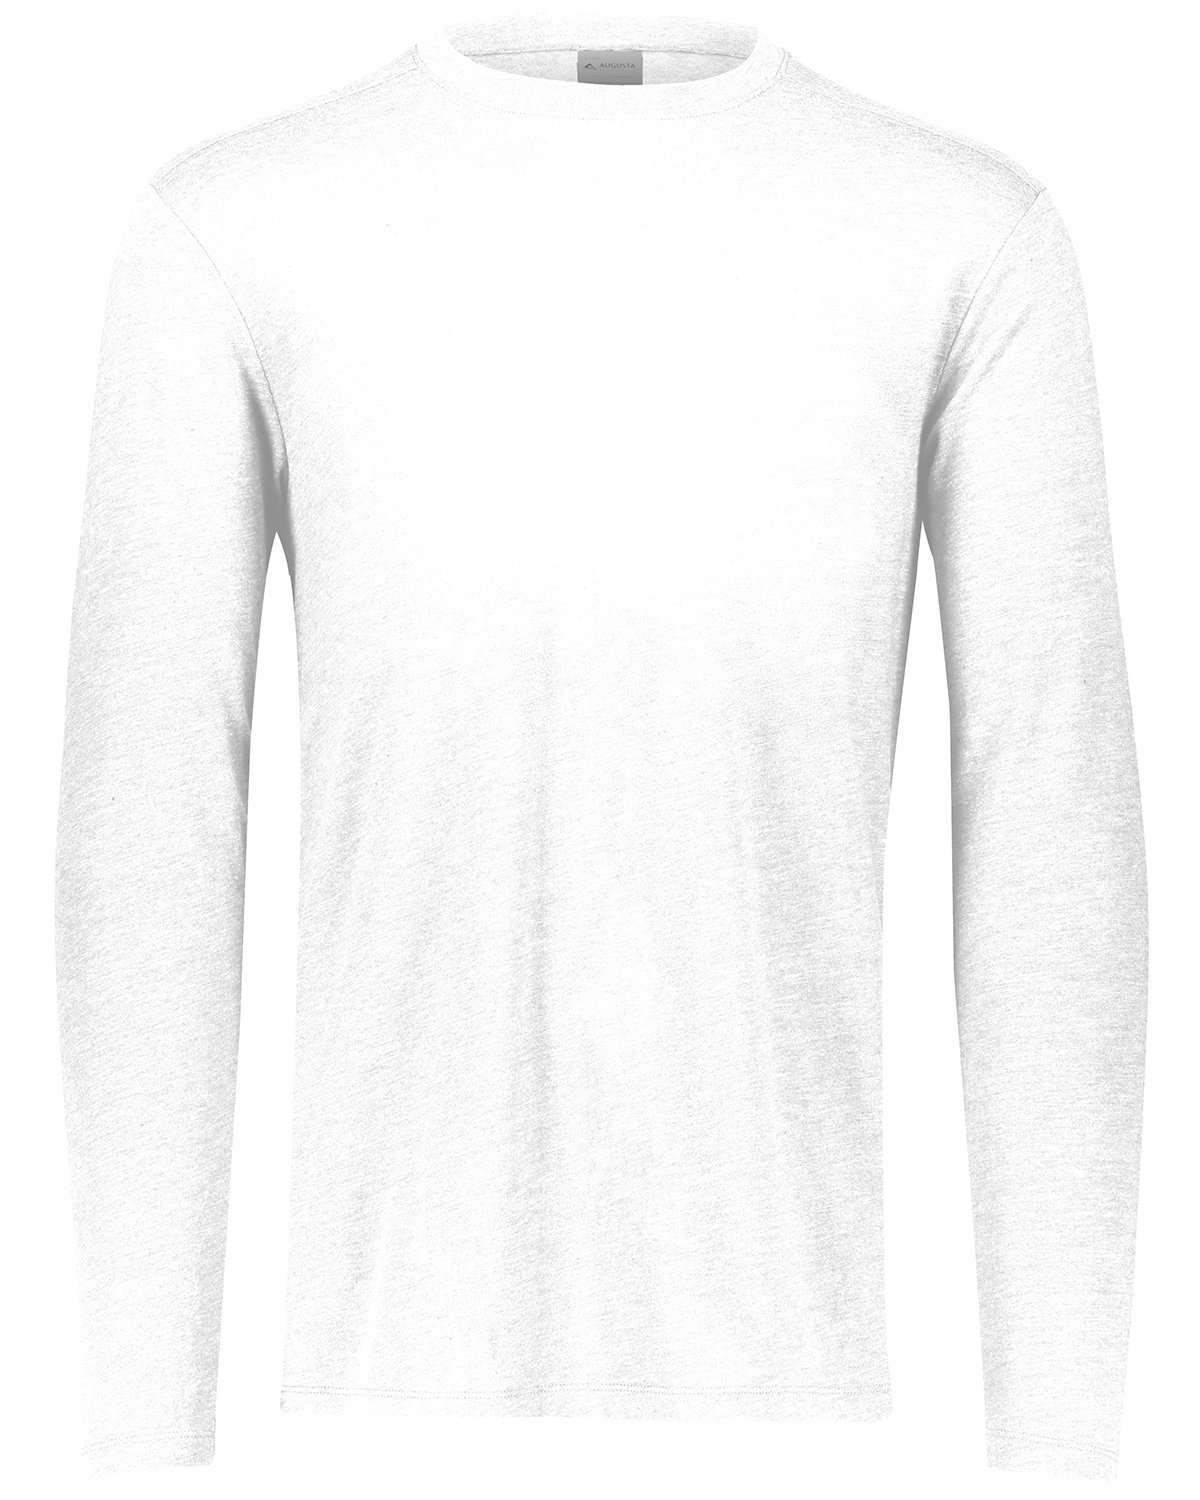 Buy/Shop T-Shirts – A4 – in Online NJ Uniforms Bordova